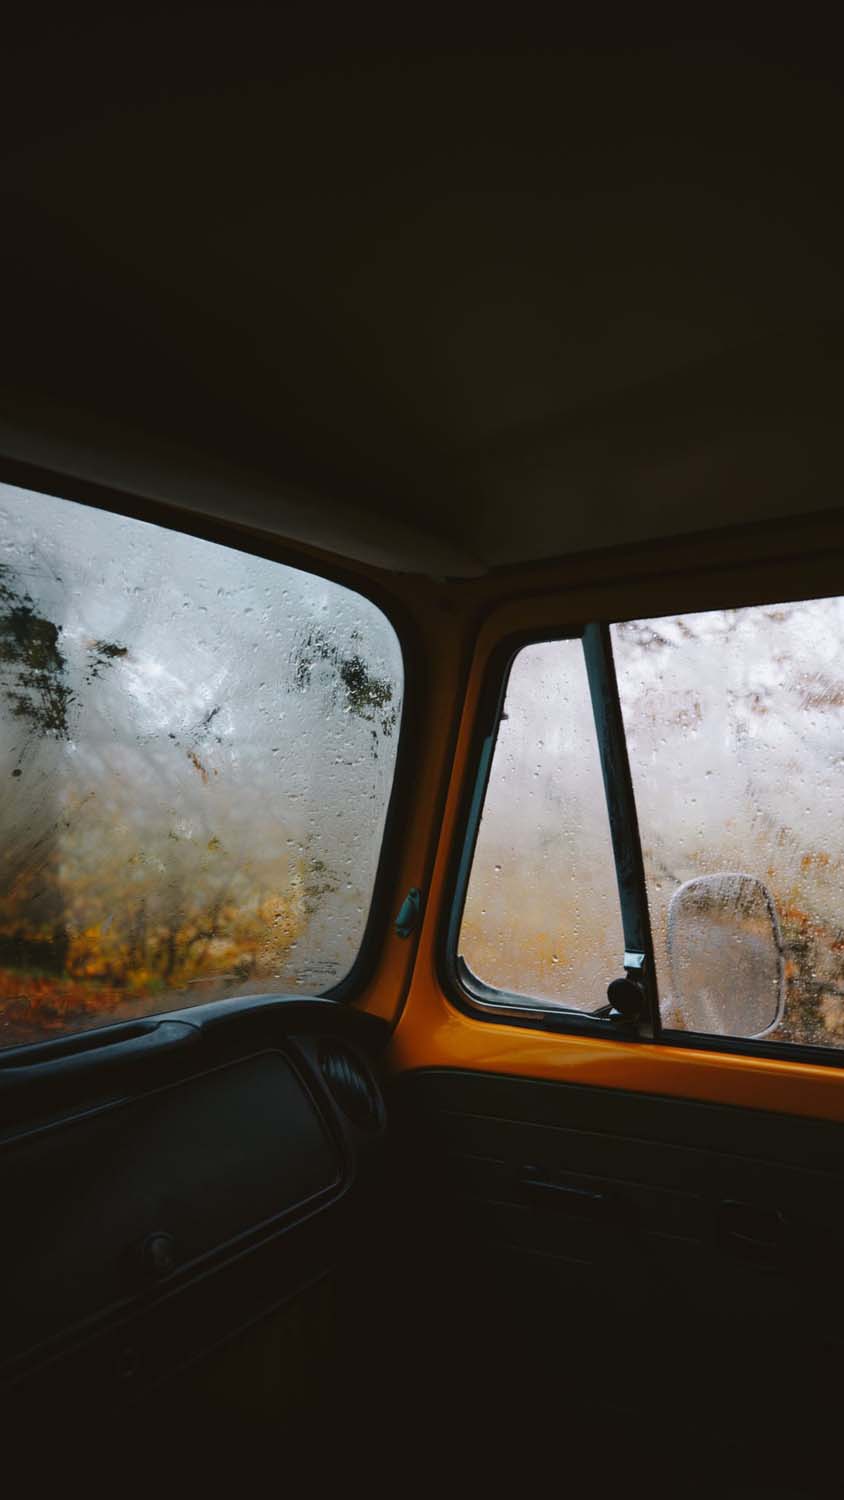 Car Window Mist iPhone Wallpaper HD